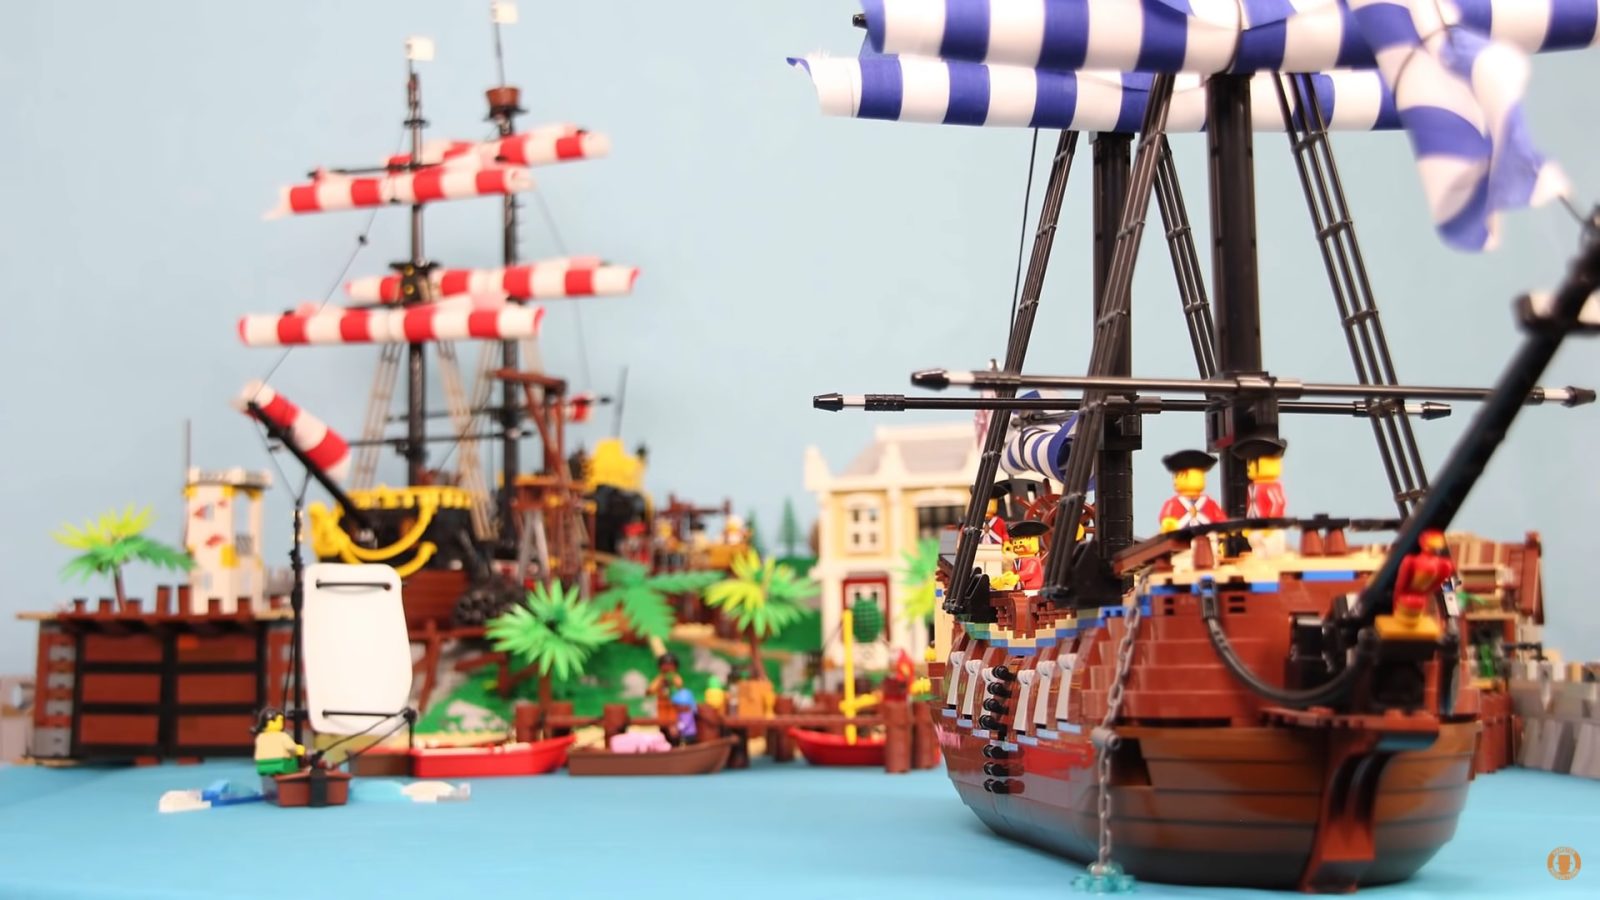 5 Free Gift Codes in Pirate Ocean Adventure. 